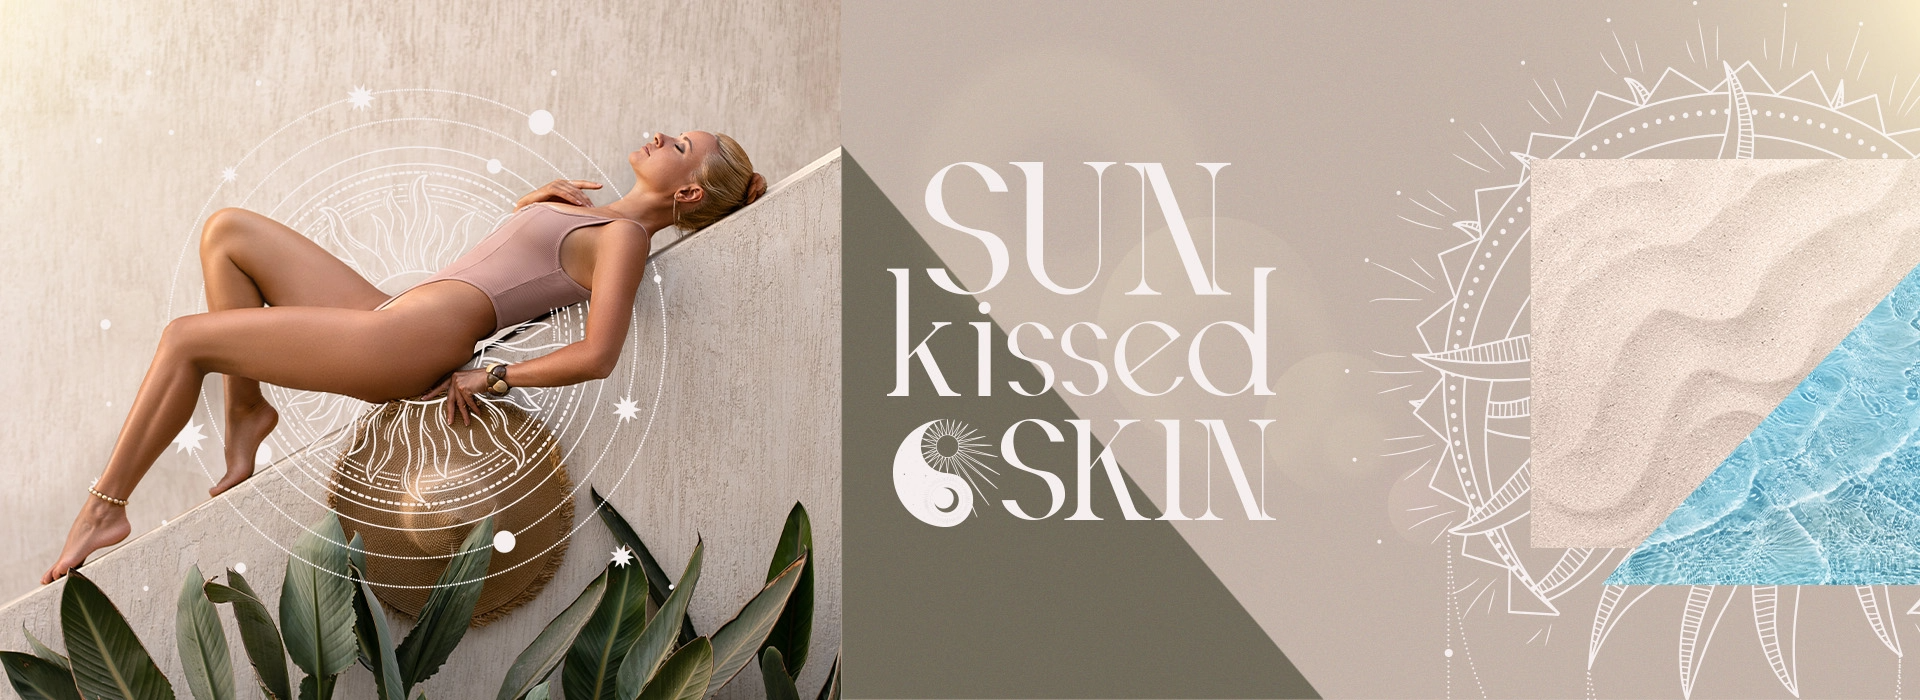 Sun Kissed Skin